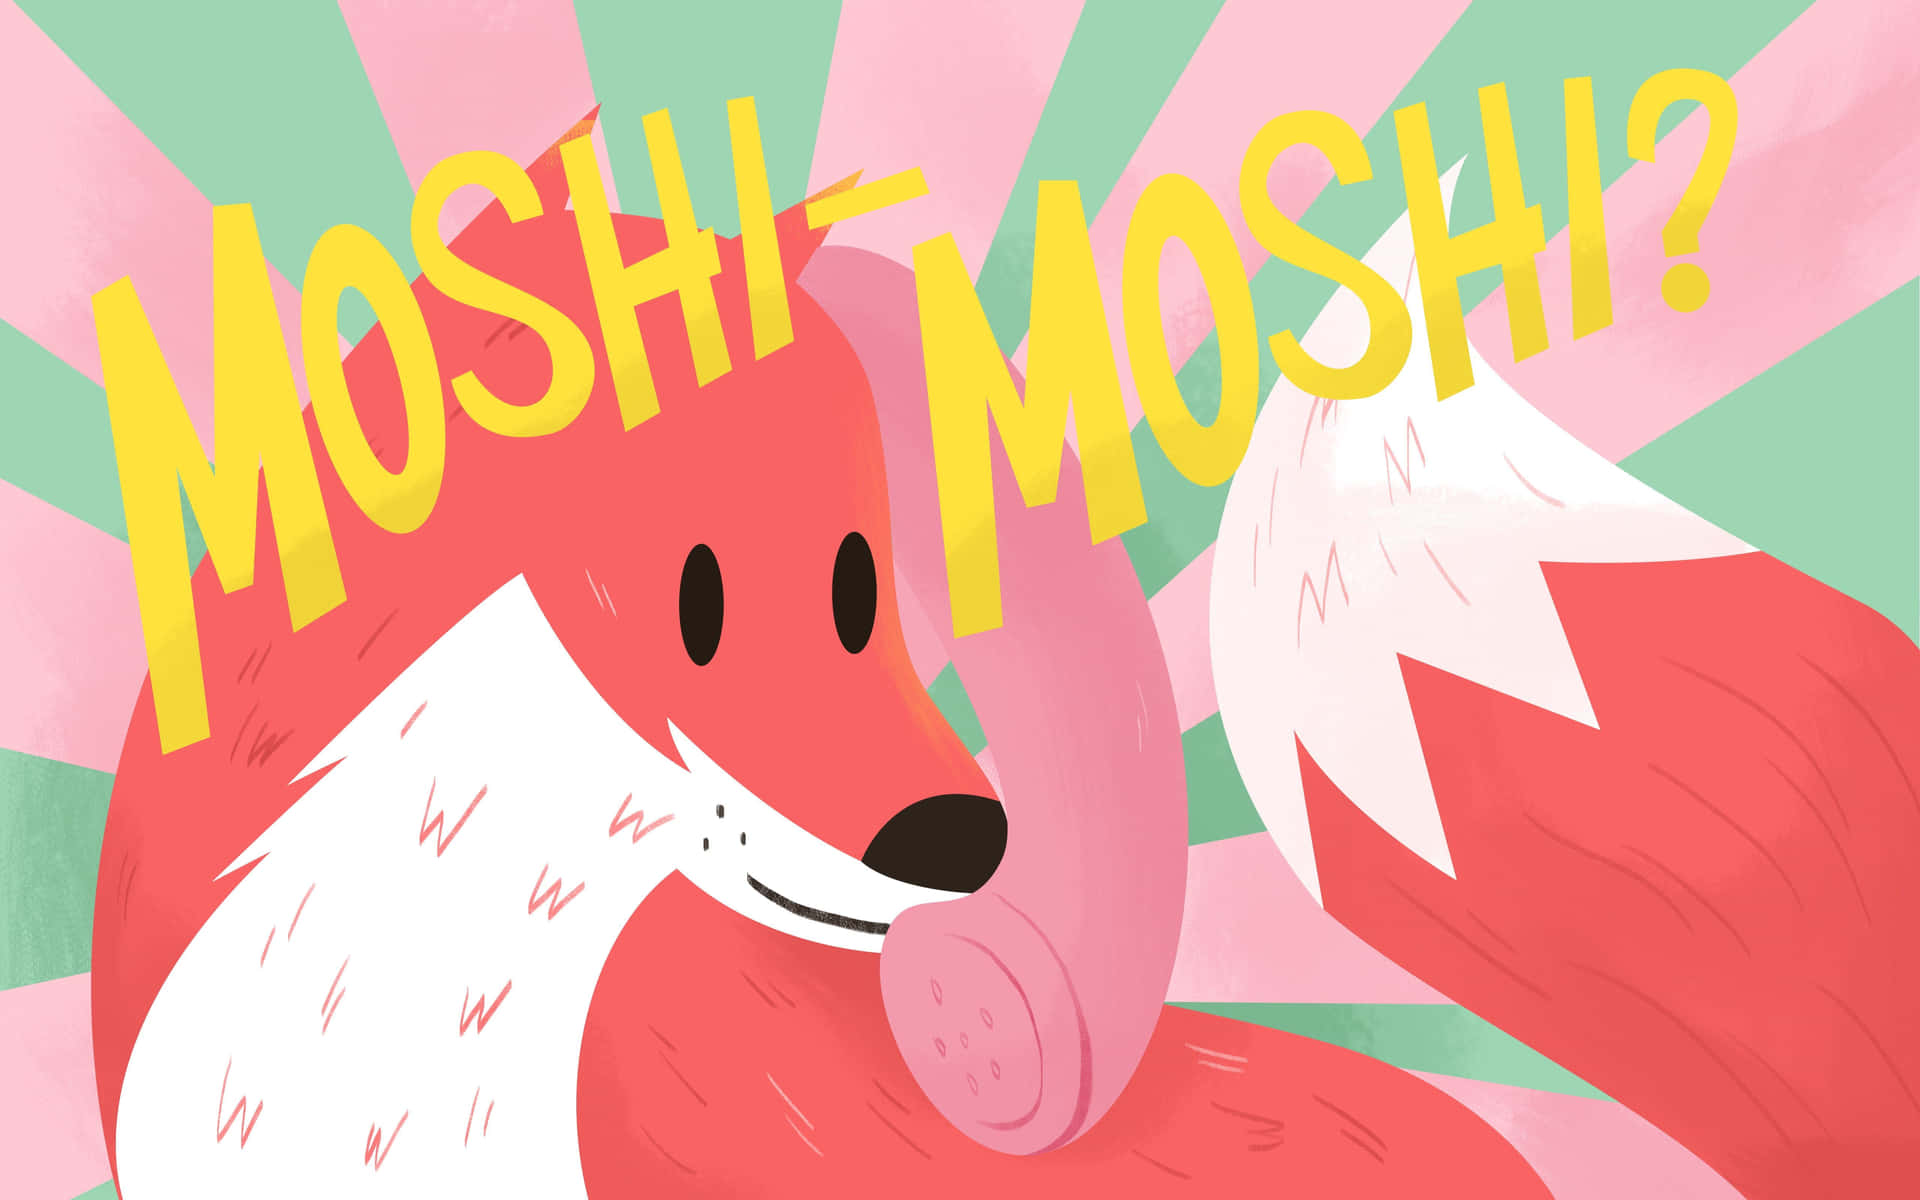 Kawaii Fox: Cute and Colorful Fox Illustration Wallpaper